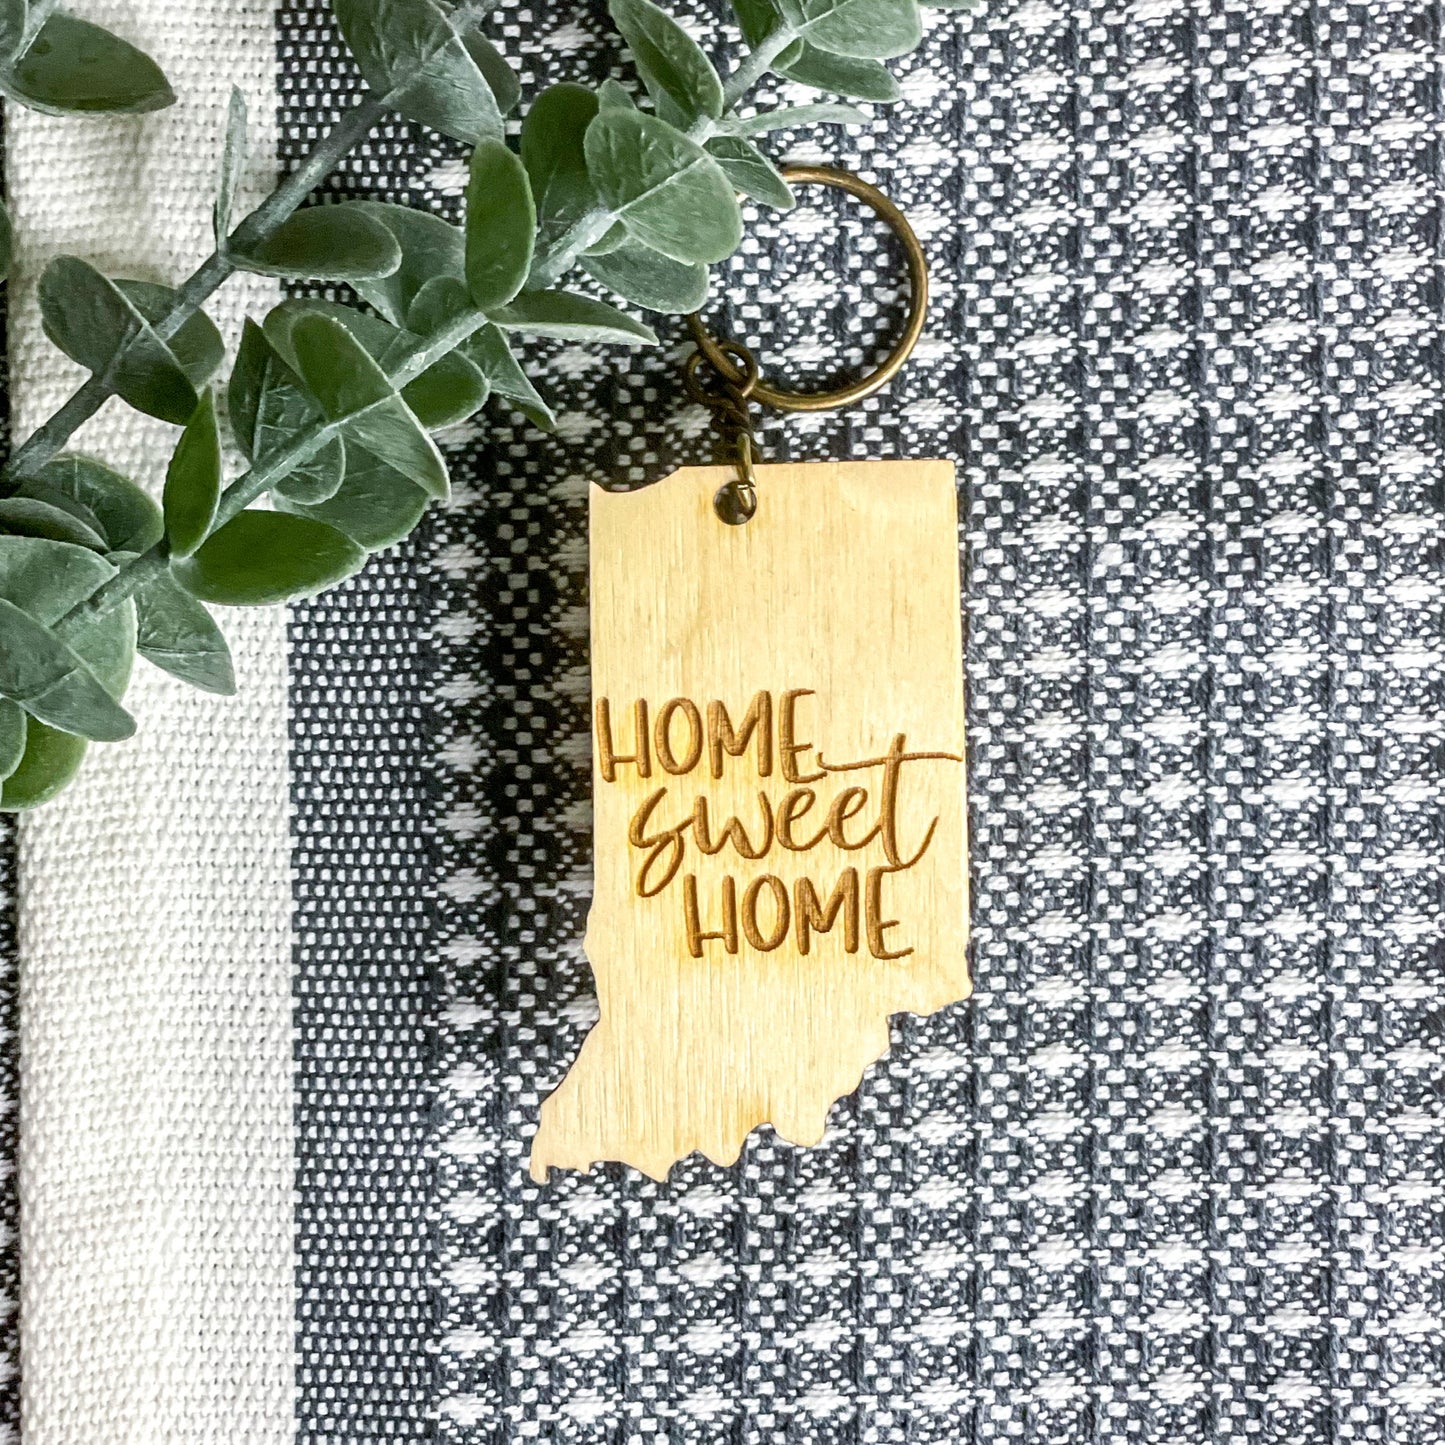 Indiana - home sweet home - keychain